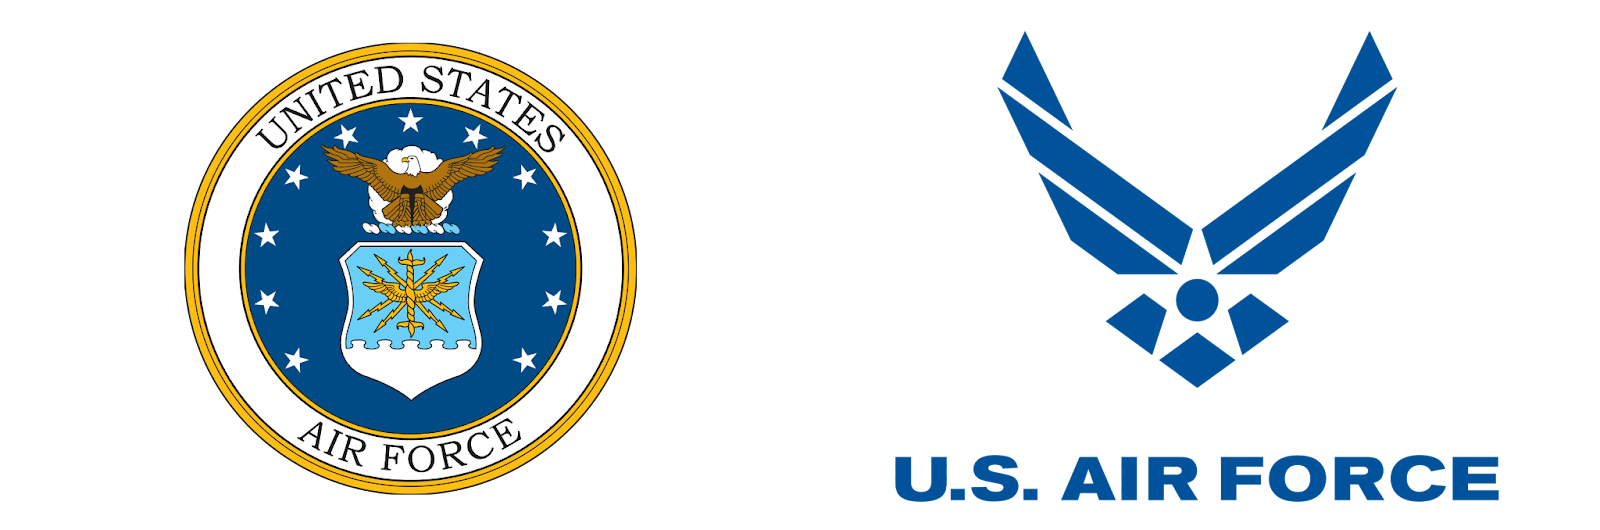 Air force emblem and logo. 